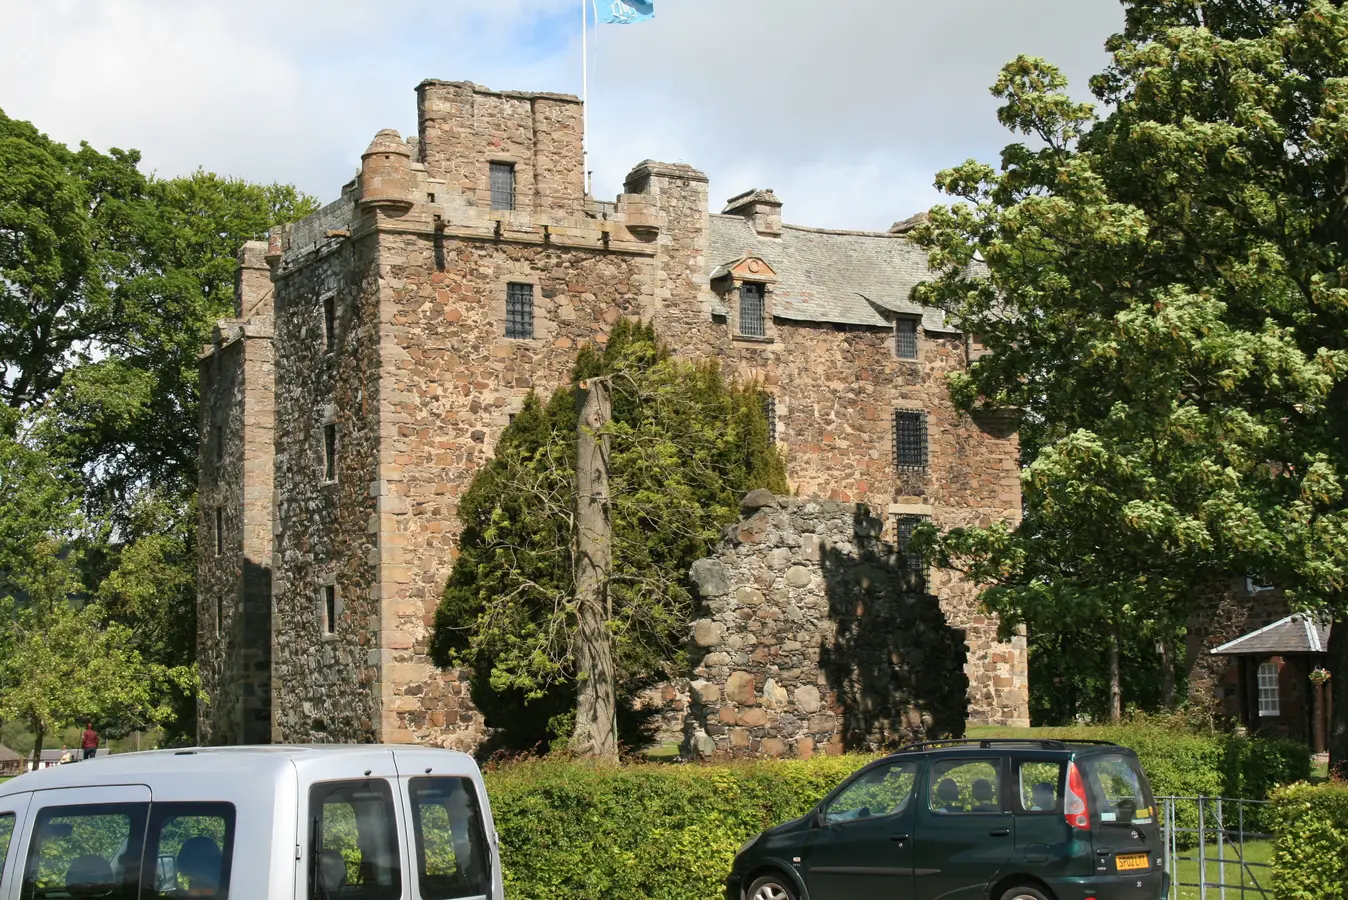 Gruselige Burgen in Schottland, Geisterburgen, Spukschloss in Schottland, Geisterschlösser in Schottland